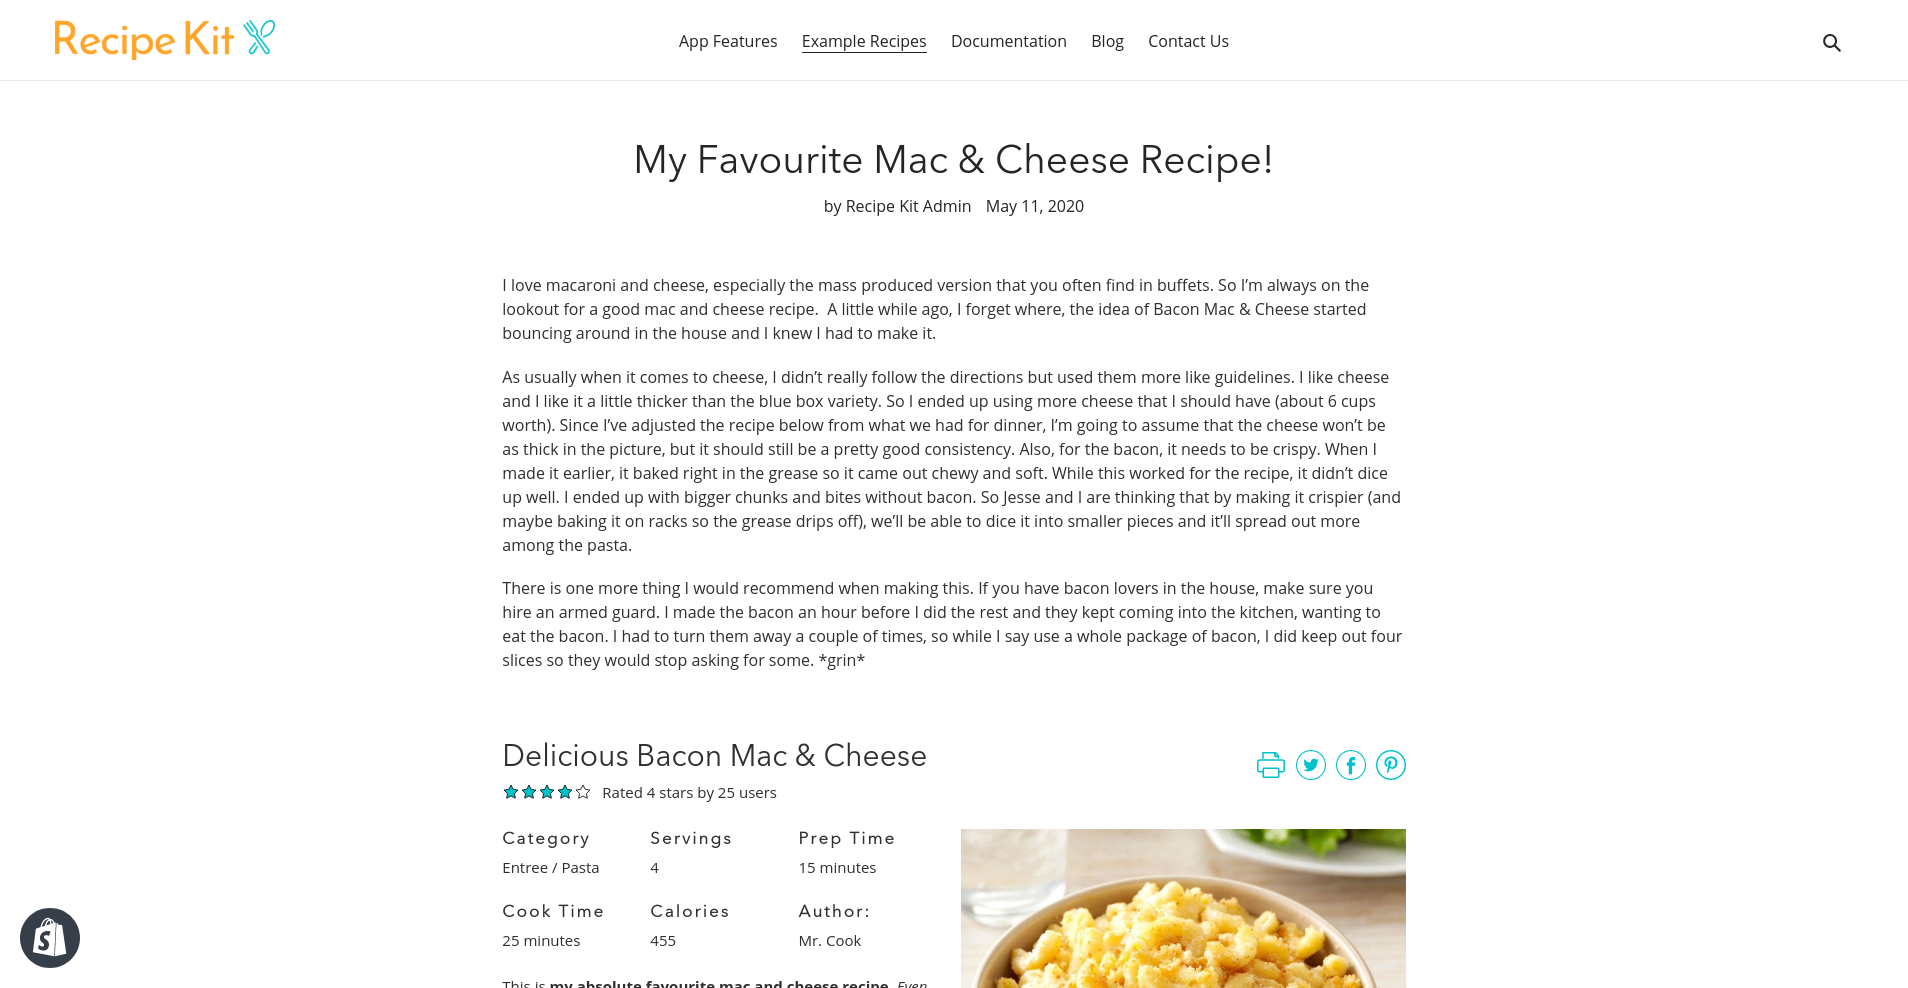 Gorgeous recipe card design showed on a Shopfiy blog post thanks to Recipe Kit!